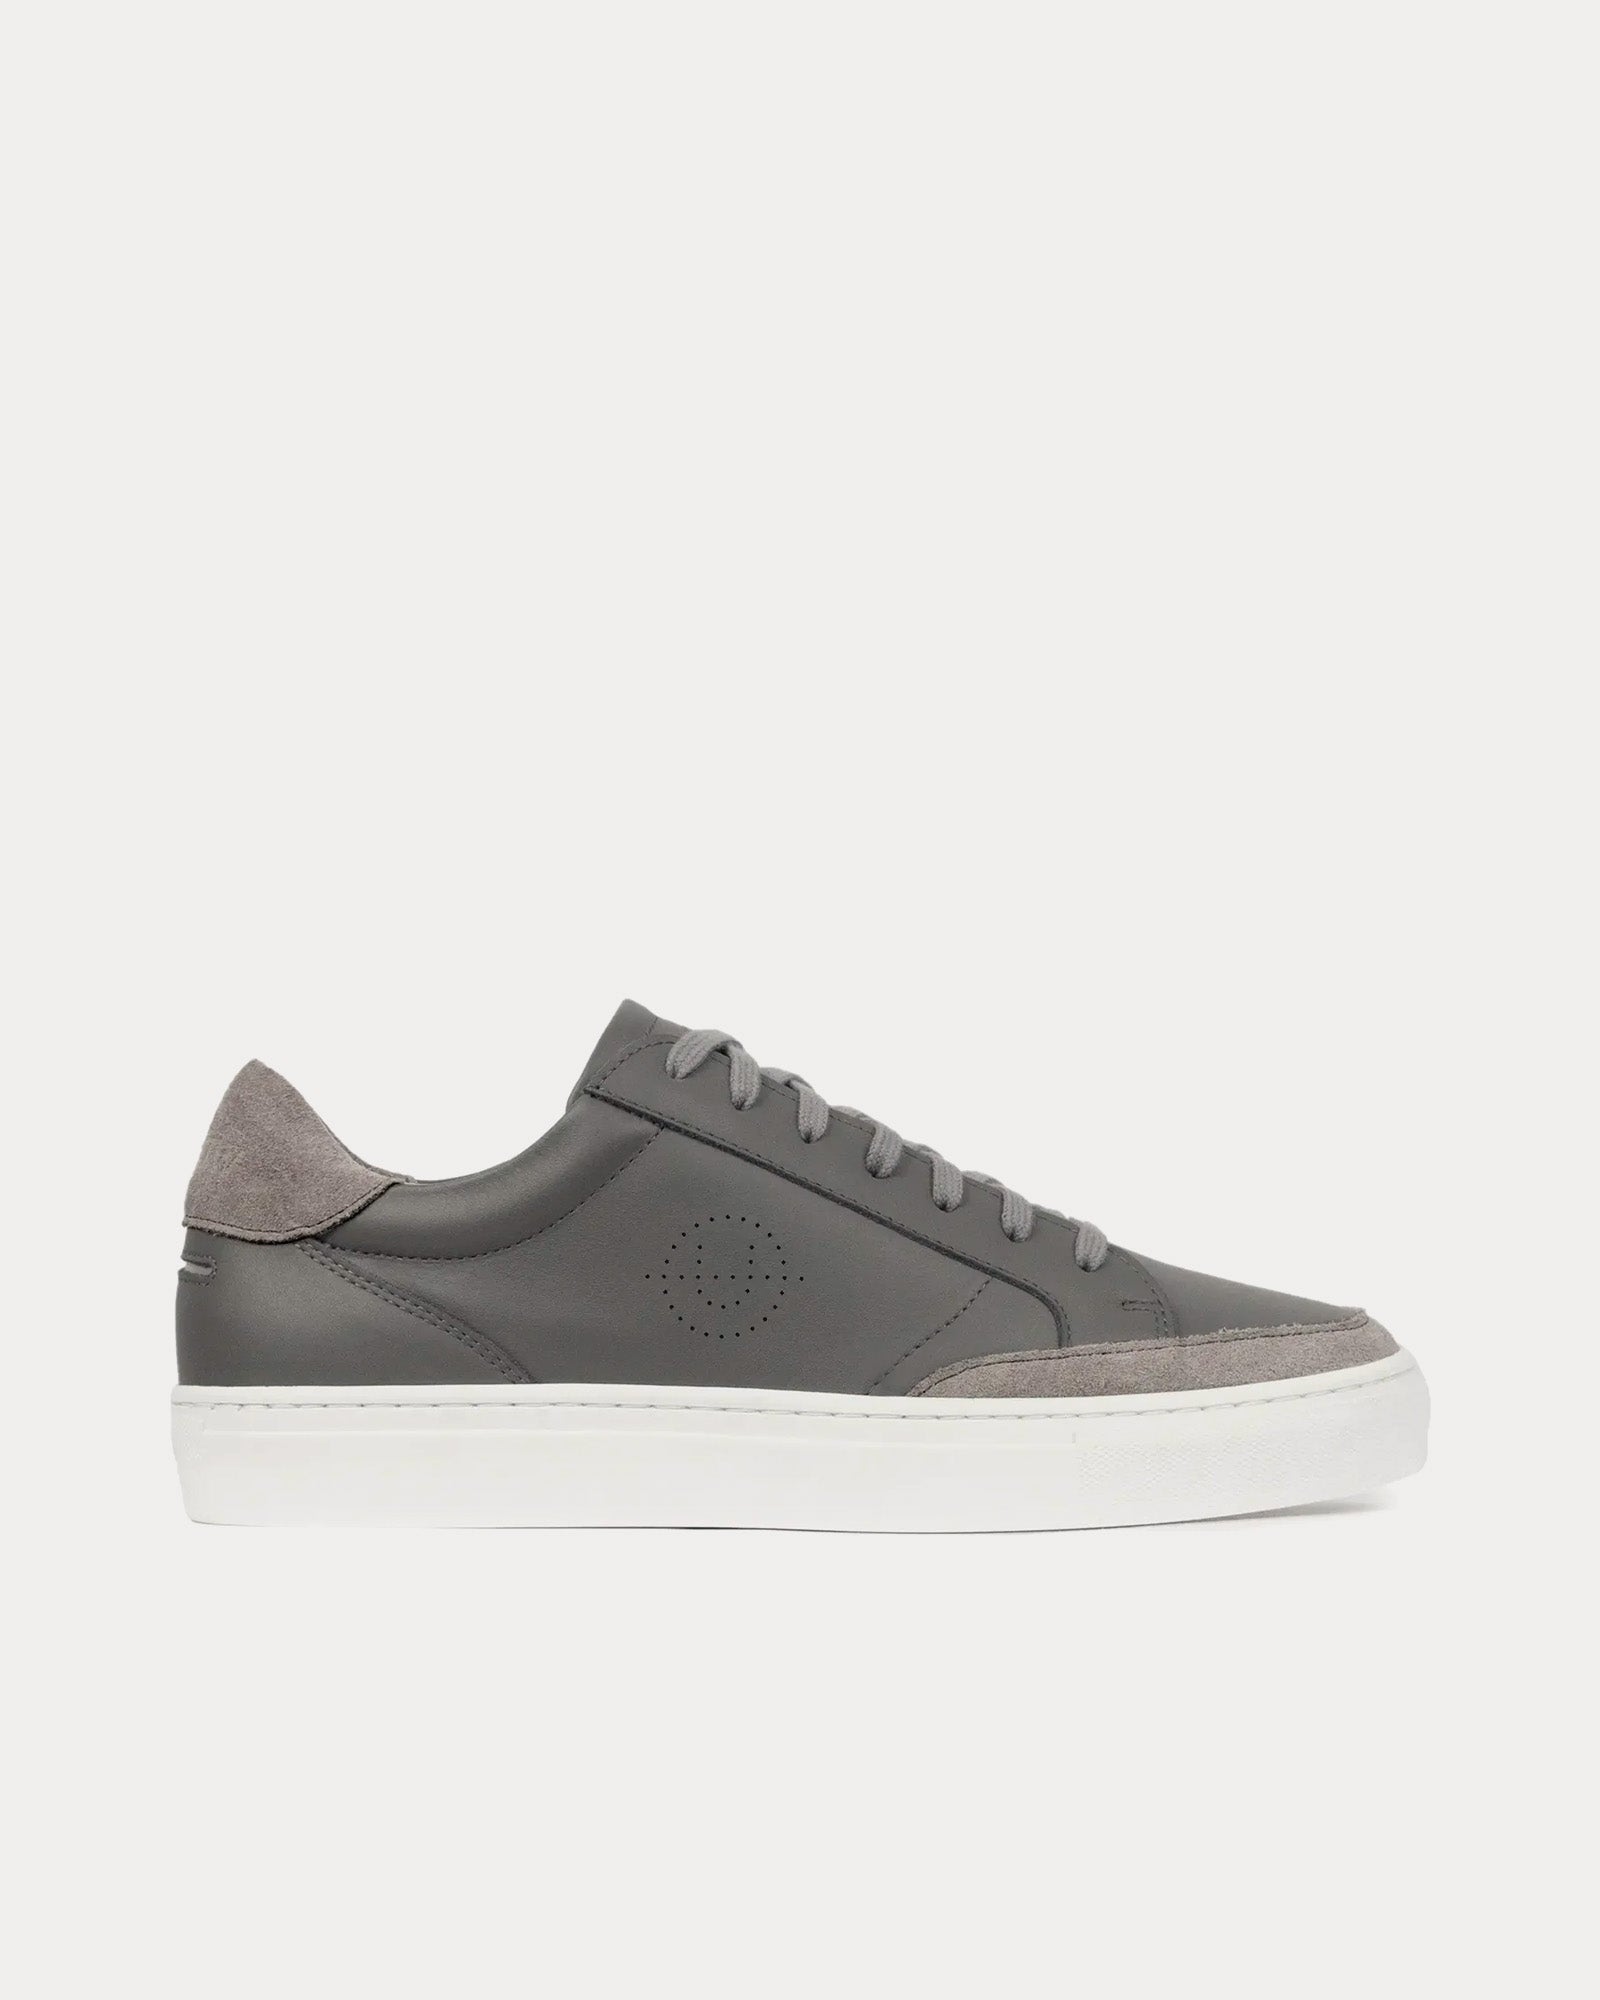 Unseen Footwear - Helier Leather & Suede Grey / White Low Top Sneakers